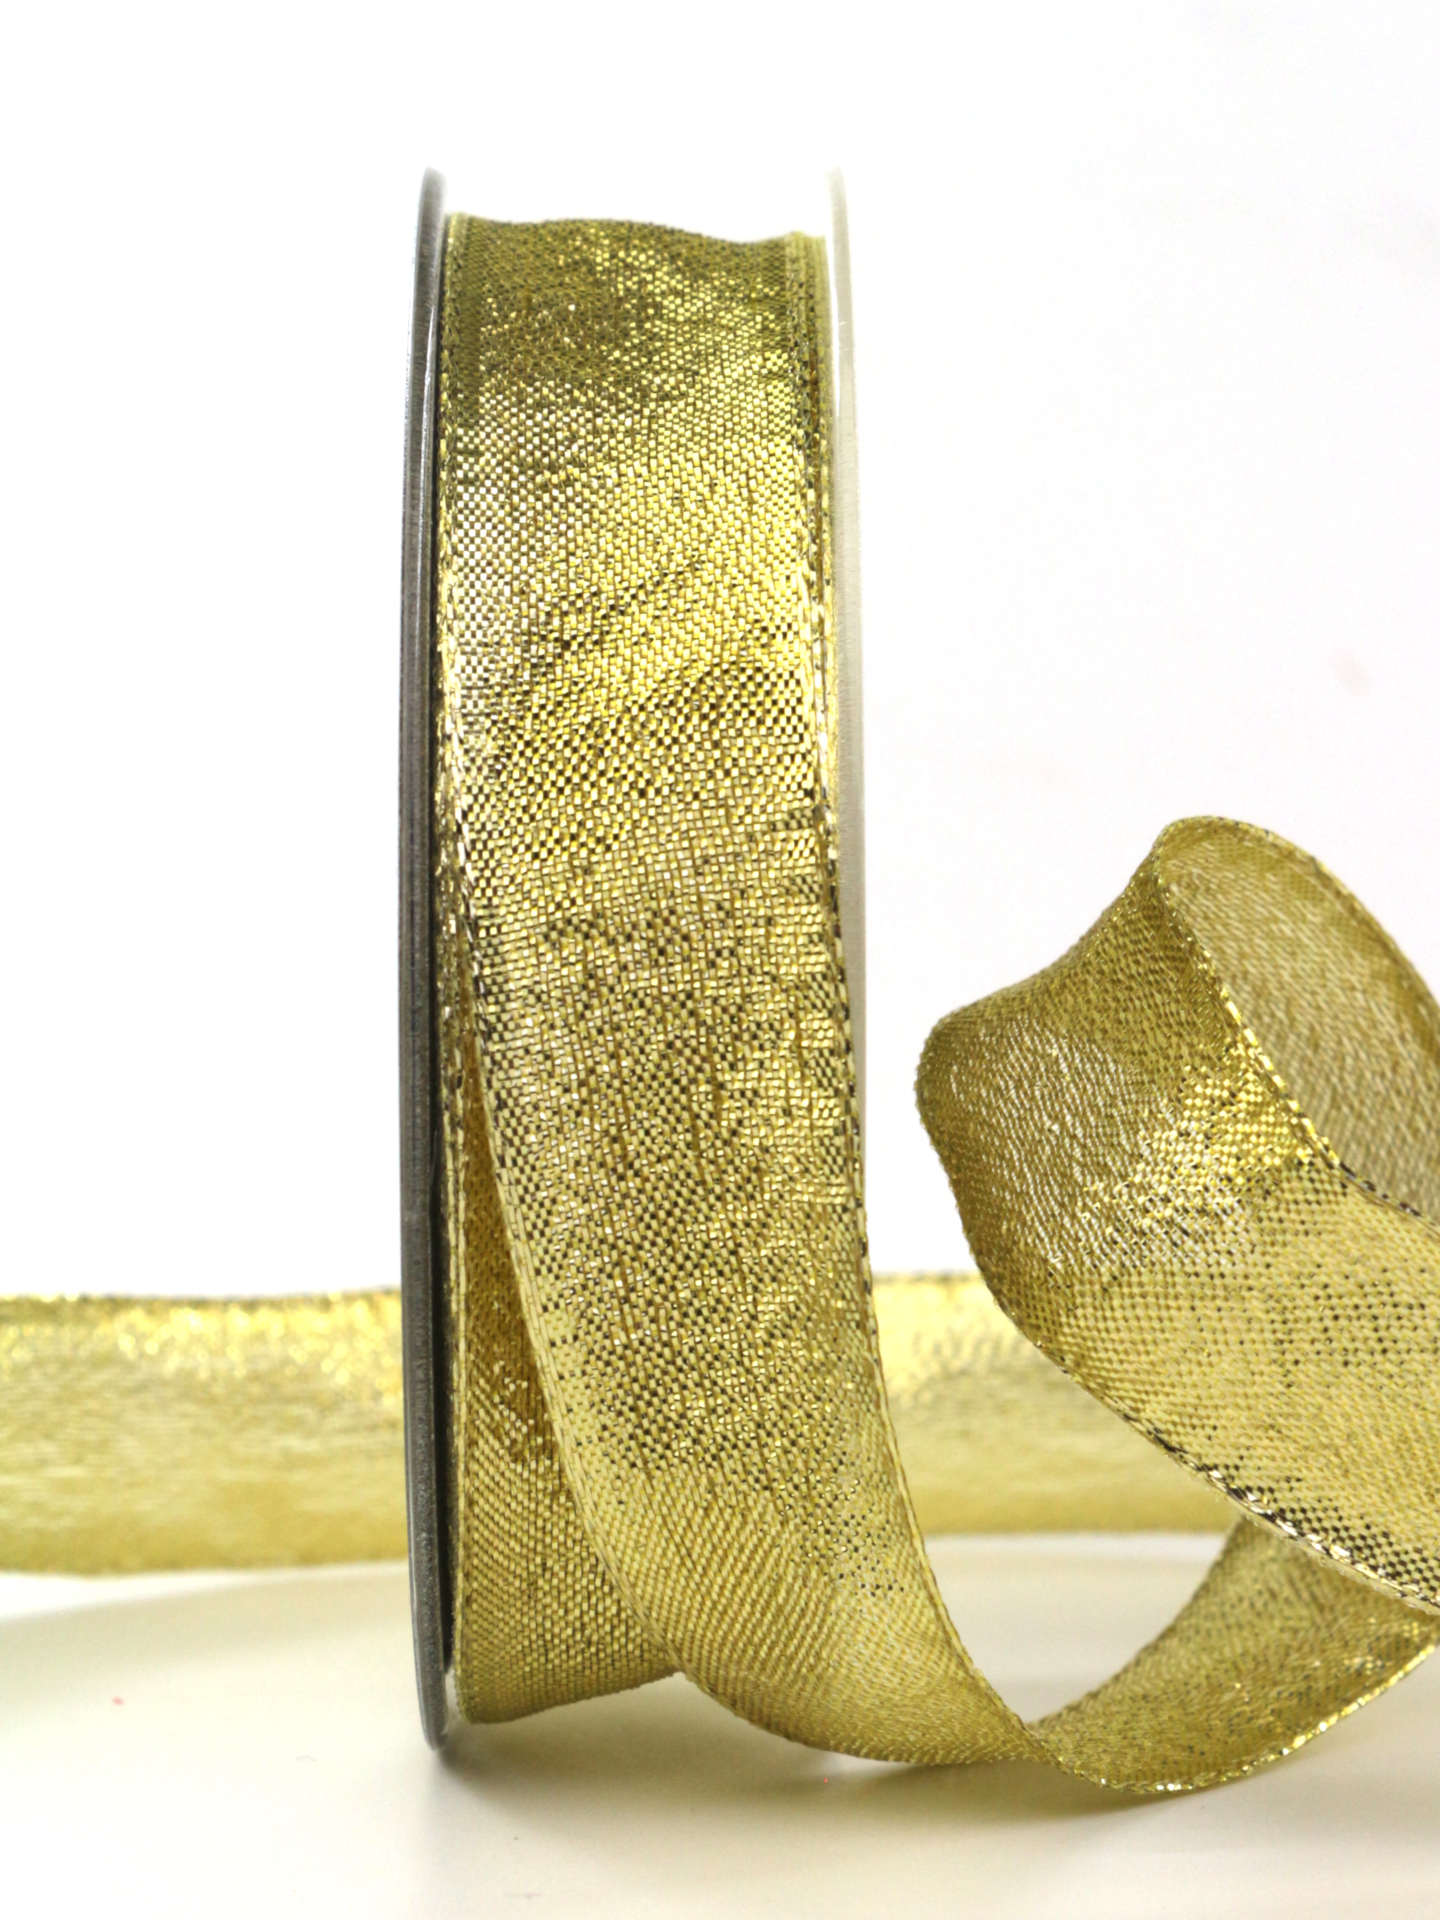 Goldband „Brokat“, gold, 25 mm breit, 25 m Rolle - weihnachtsbaender, weihnachtsband, geschenkband-weihnachten-dauersortiment, geschenkband-weihnachten